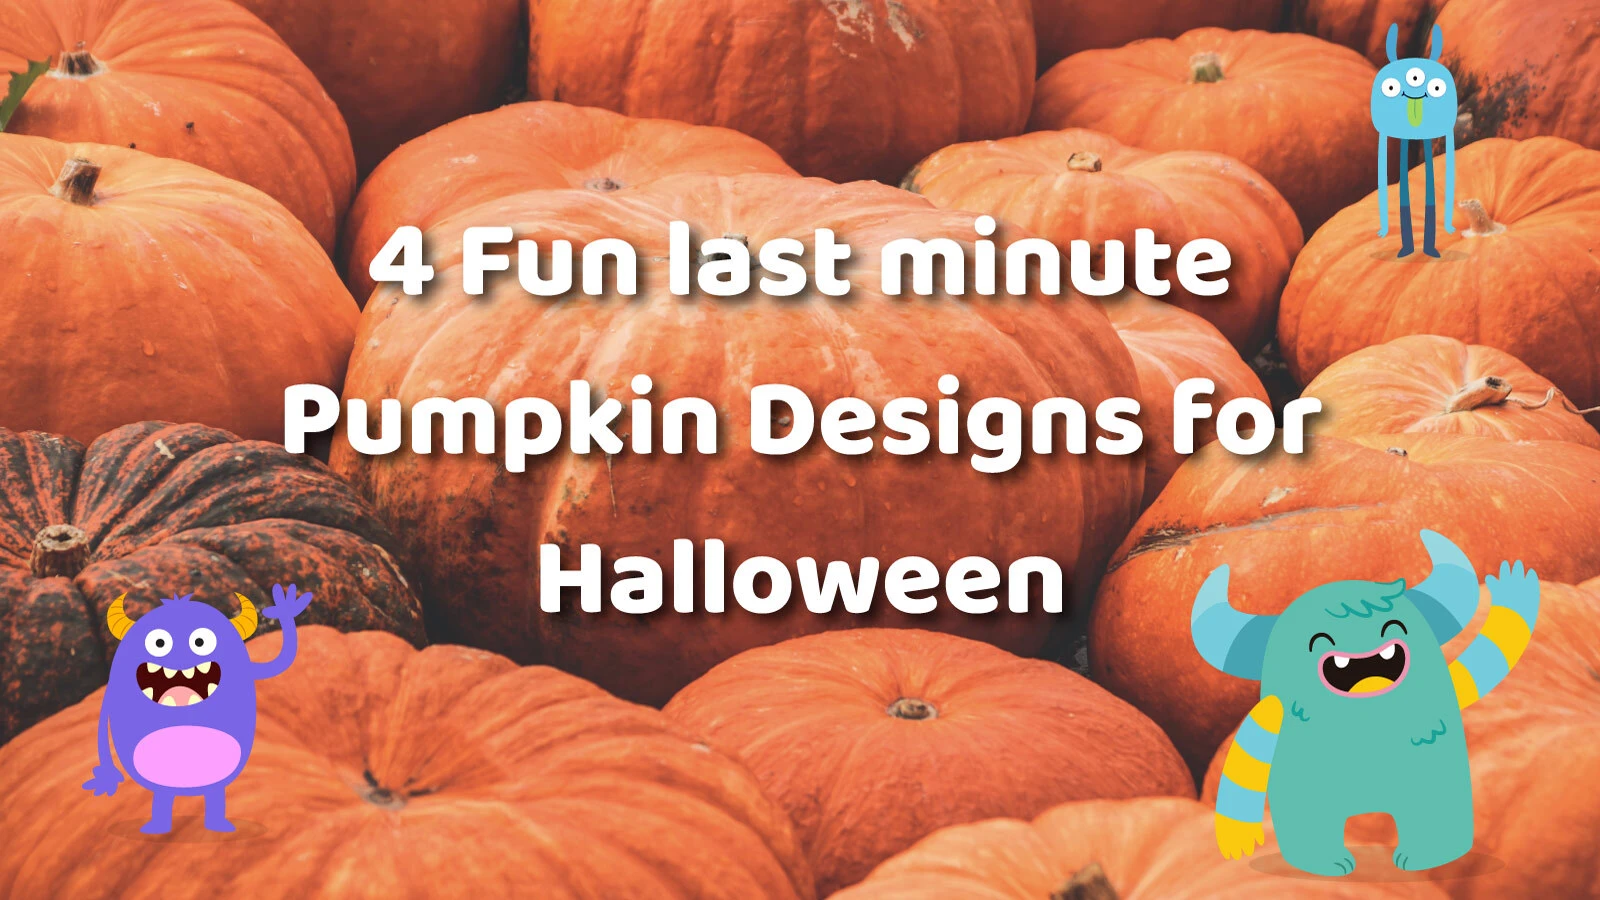 Halloween-blog-last-minute-pumpkin-designs-featured-image-16x9